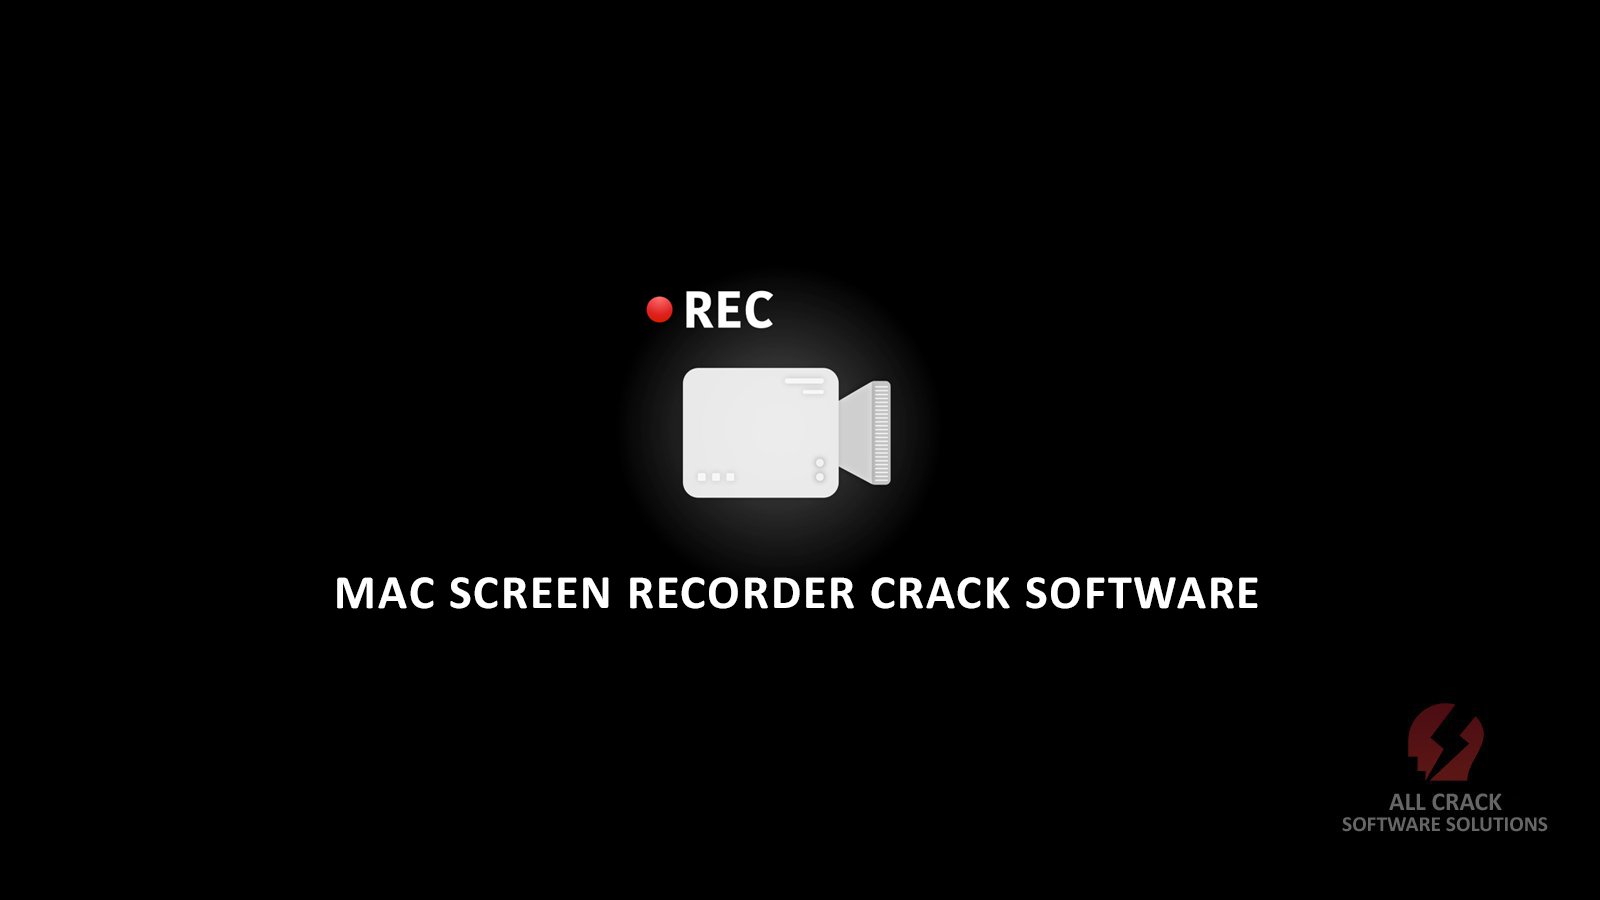 Mac Screen Recorder Crack Software Download Free